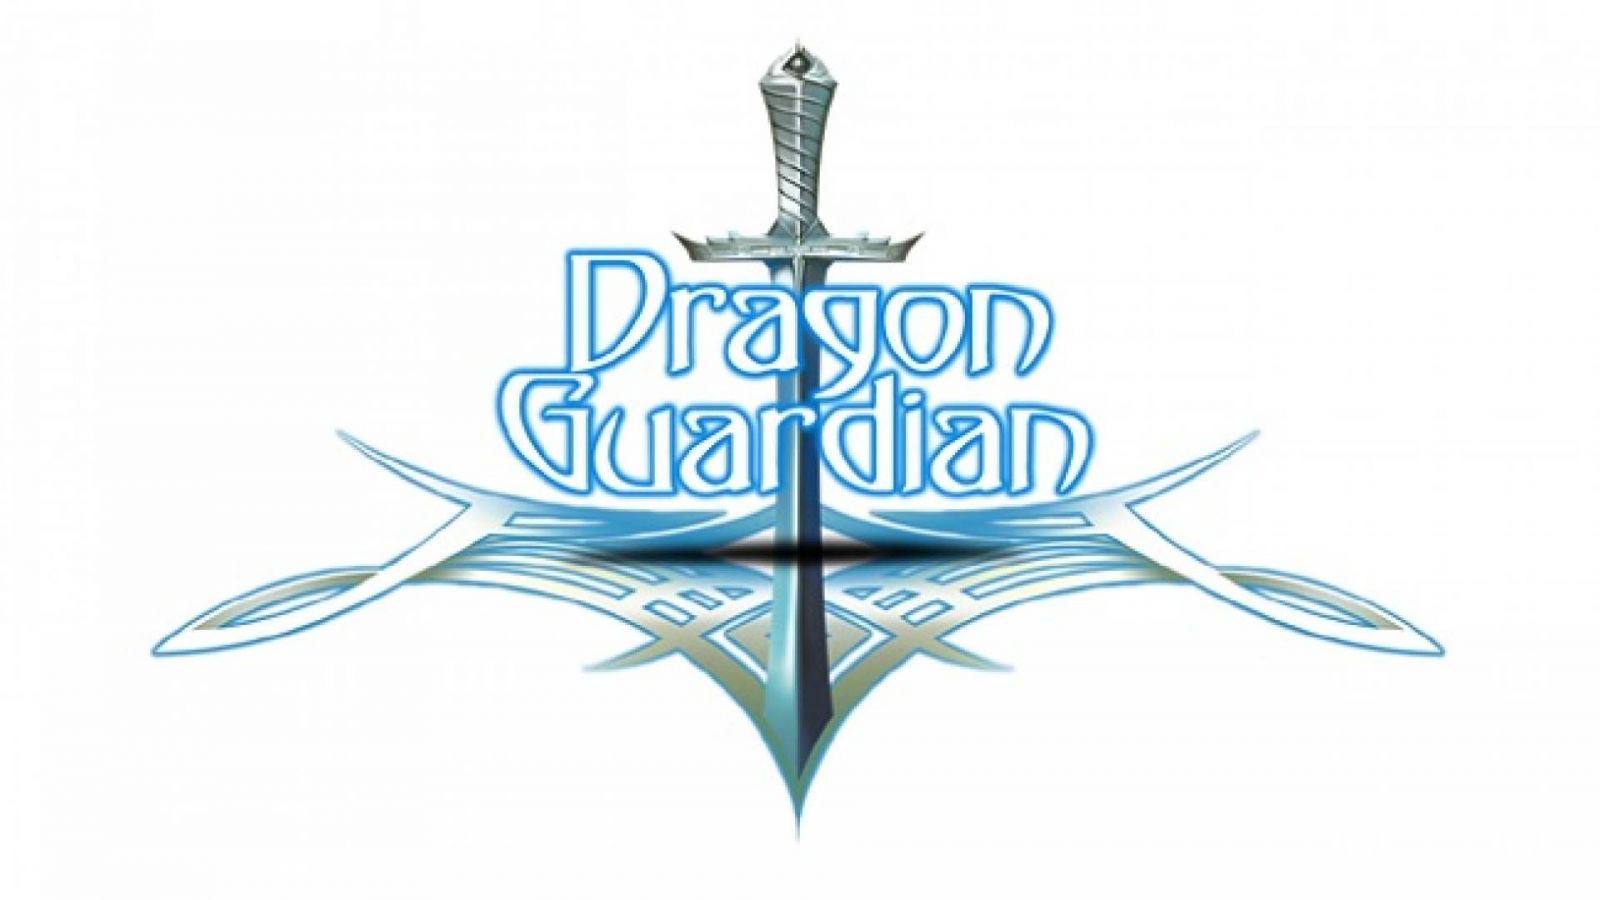 New Mini-Album from Dragon Guardian © Dragon Guardian